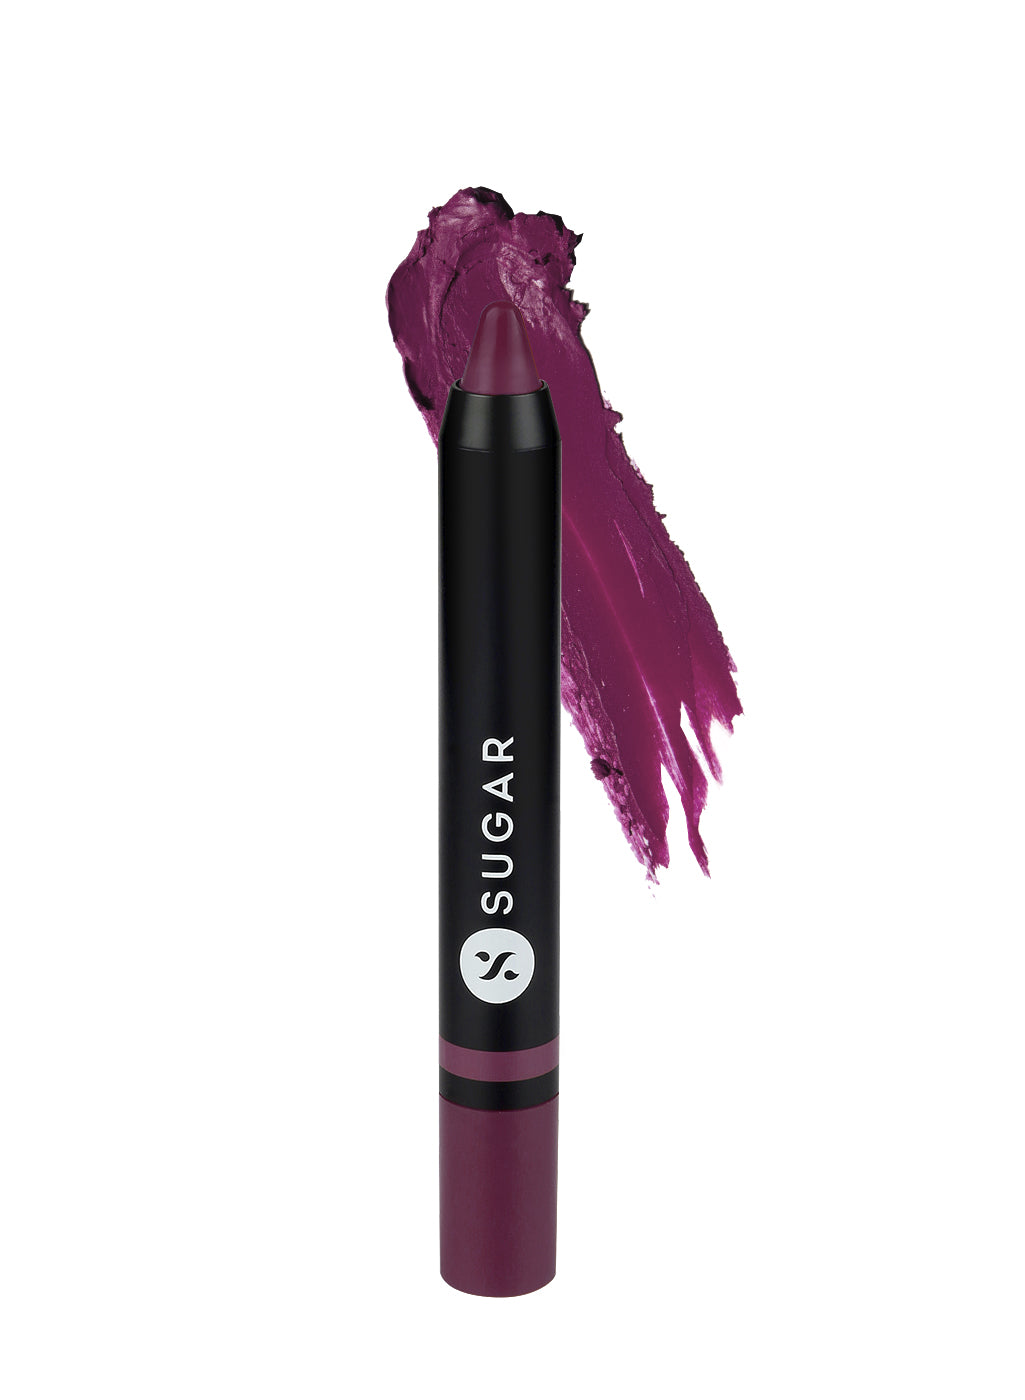 SUGAR Cosmetics Plush Crush Crème Crayon - 03 Violet Vixen (Warm Purple with hints of pink)